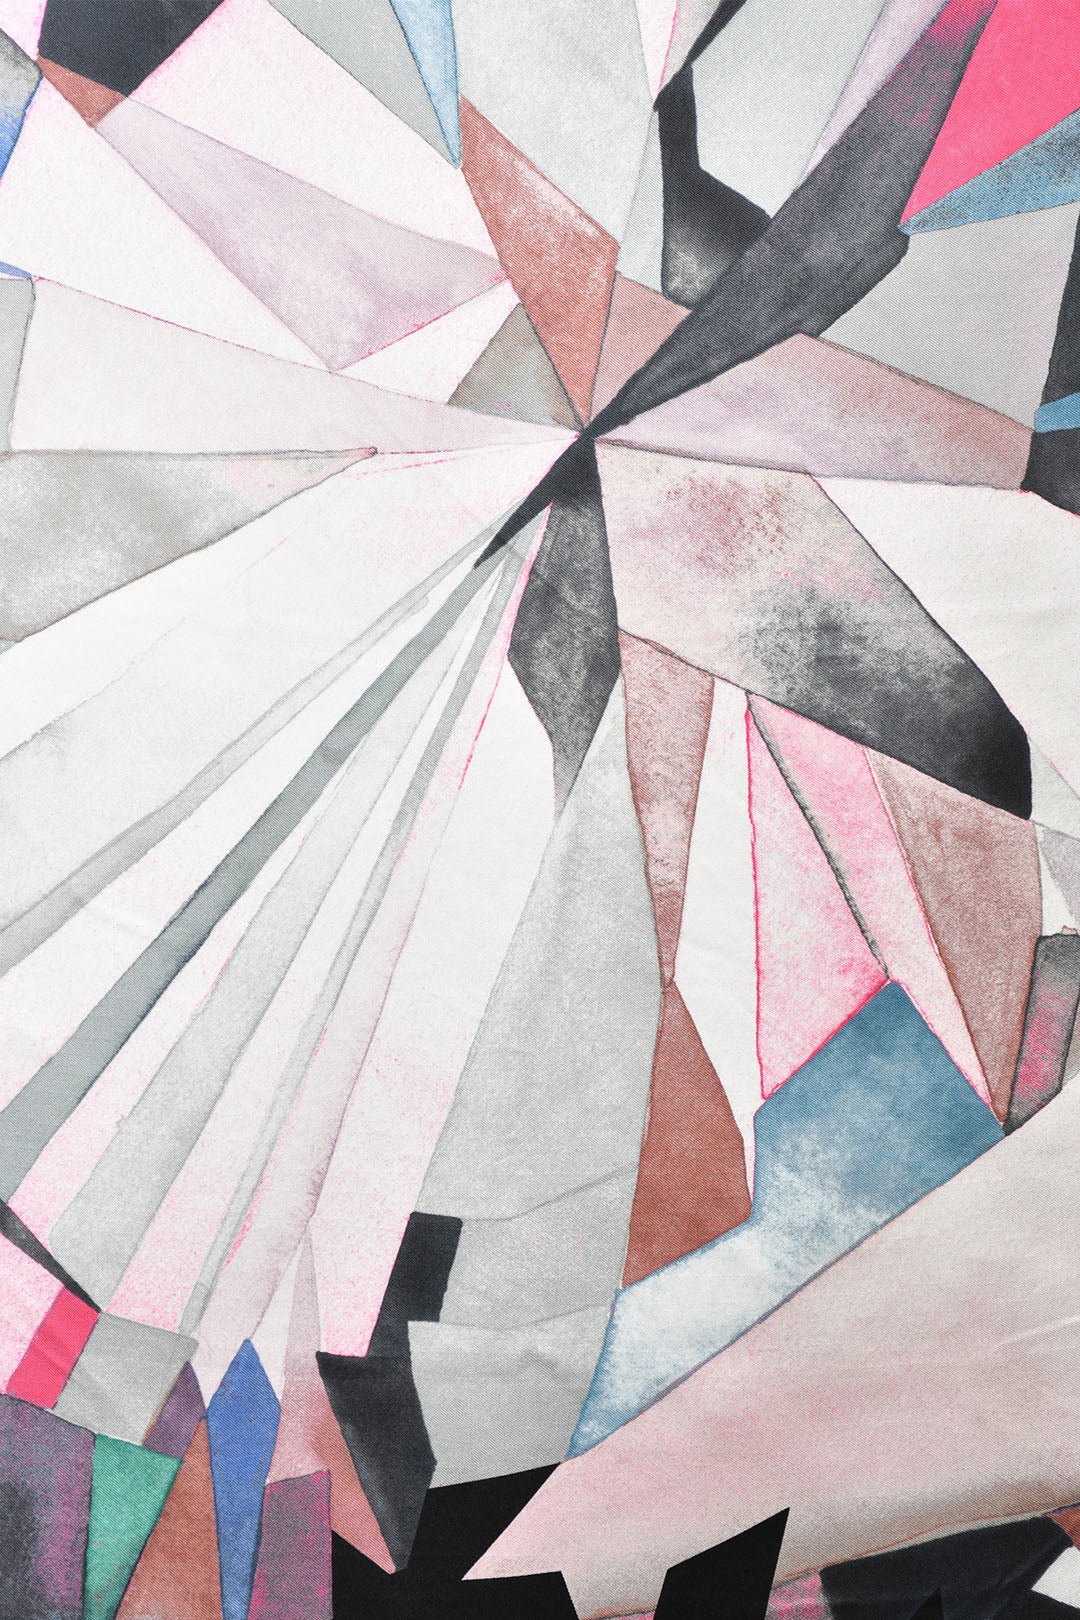 Chanel Pink/Blue Geometric Printed Silk Scarf